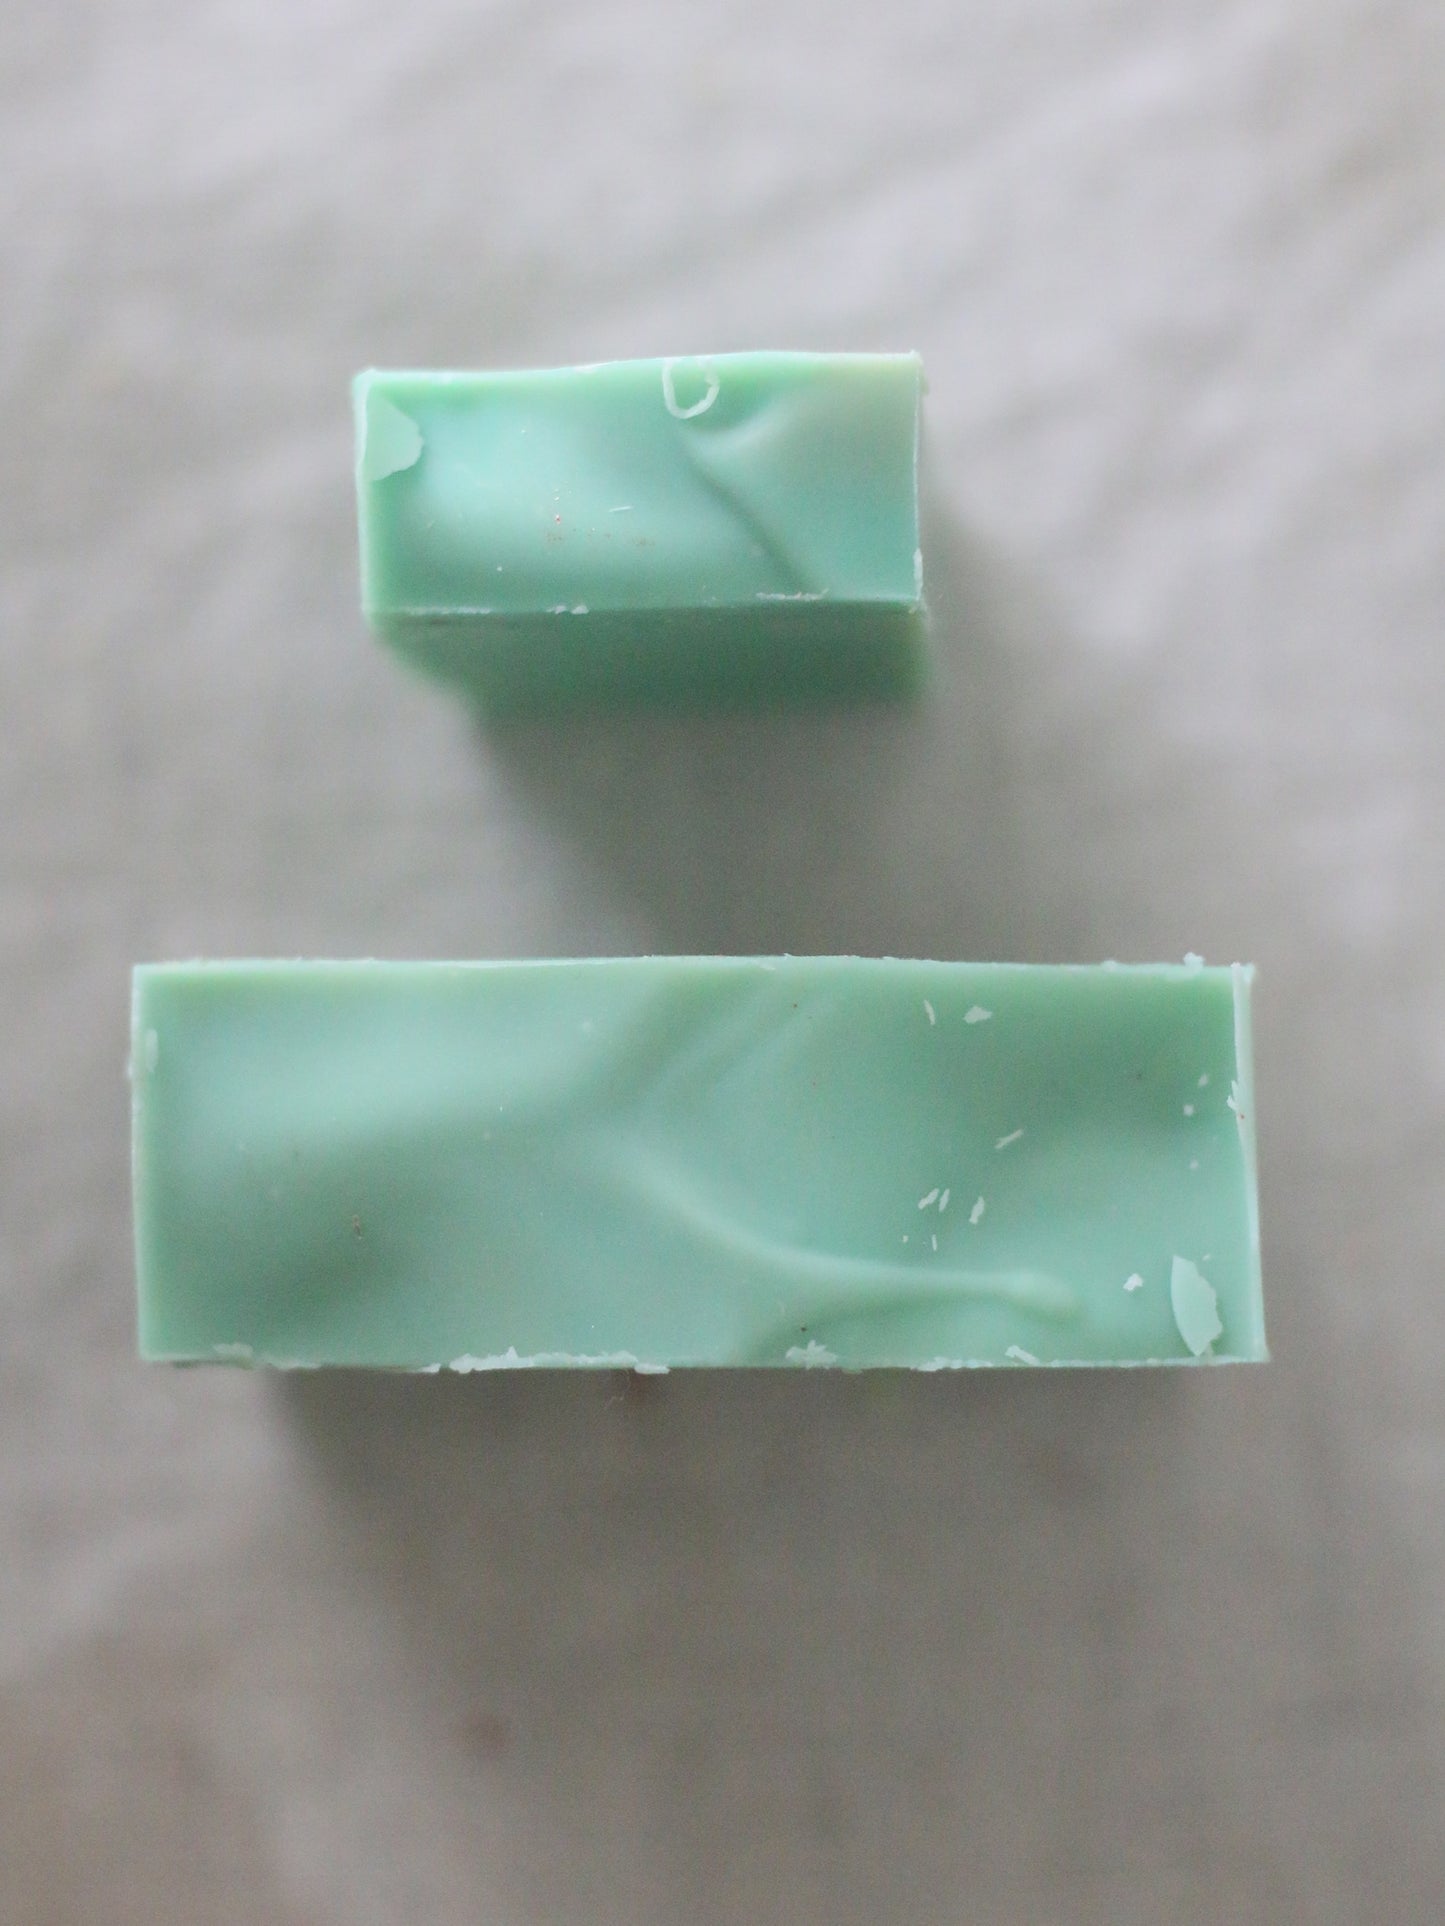 Eucalyptus Peppermint Soap